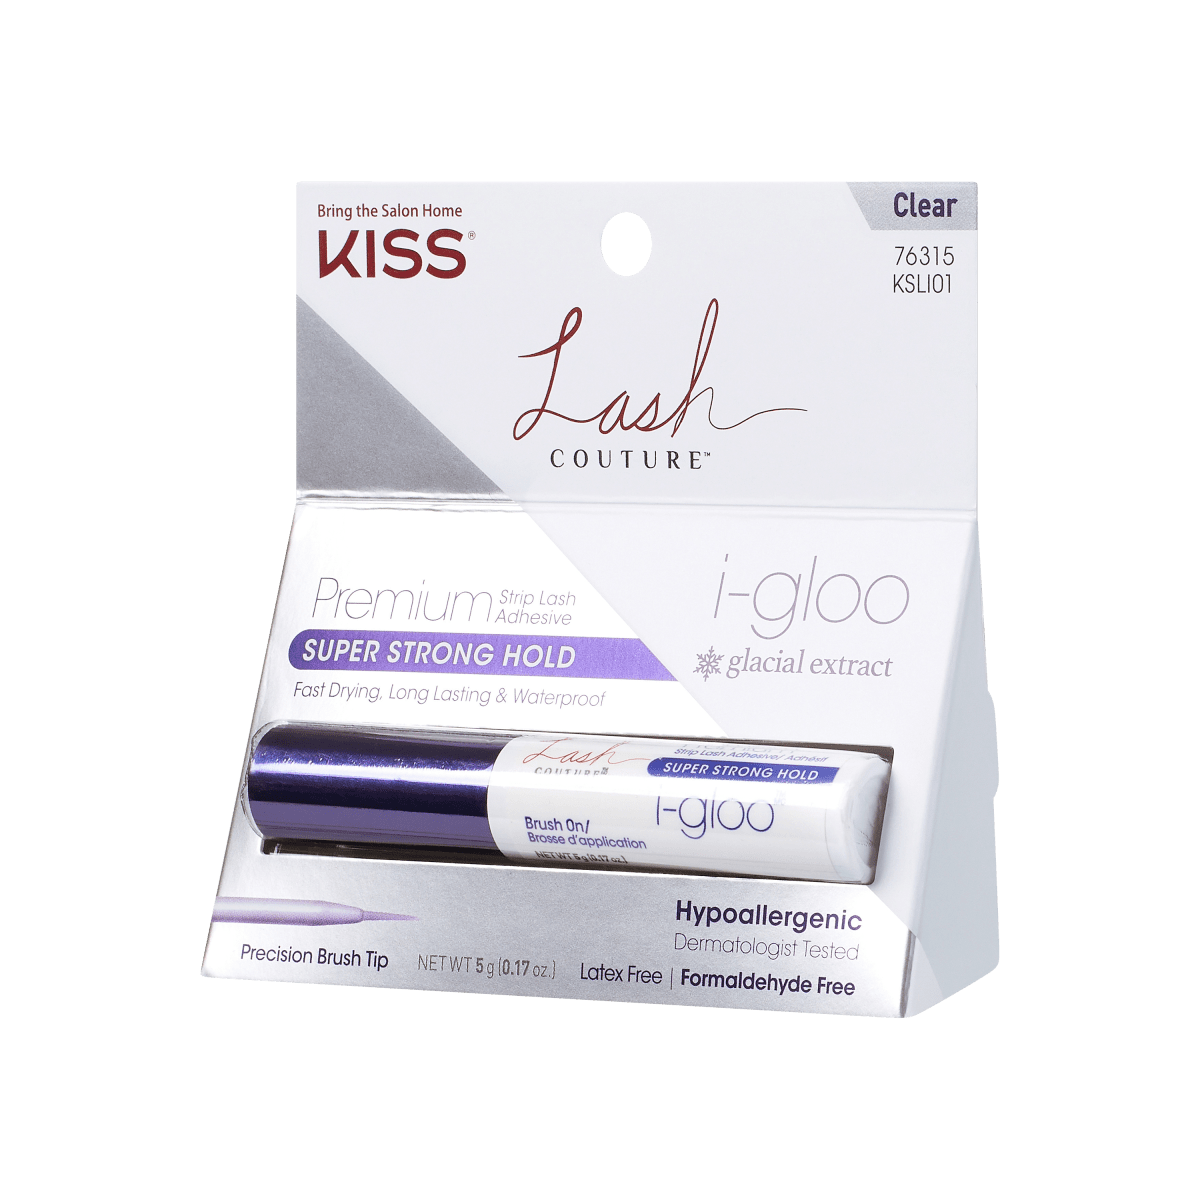 KISS Igloo Strip Lash Adhesive - Clear